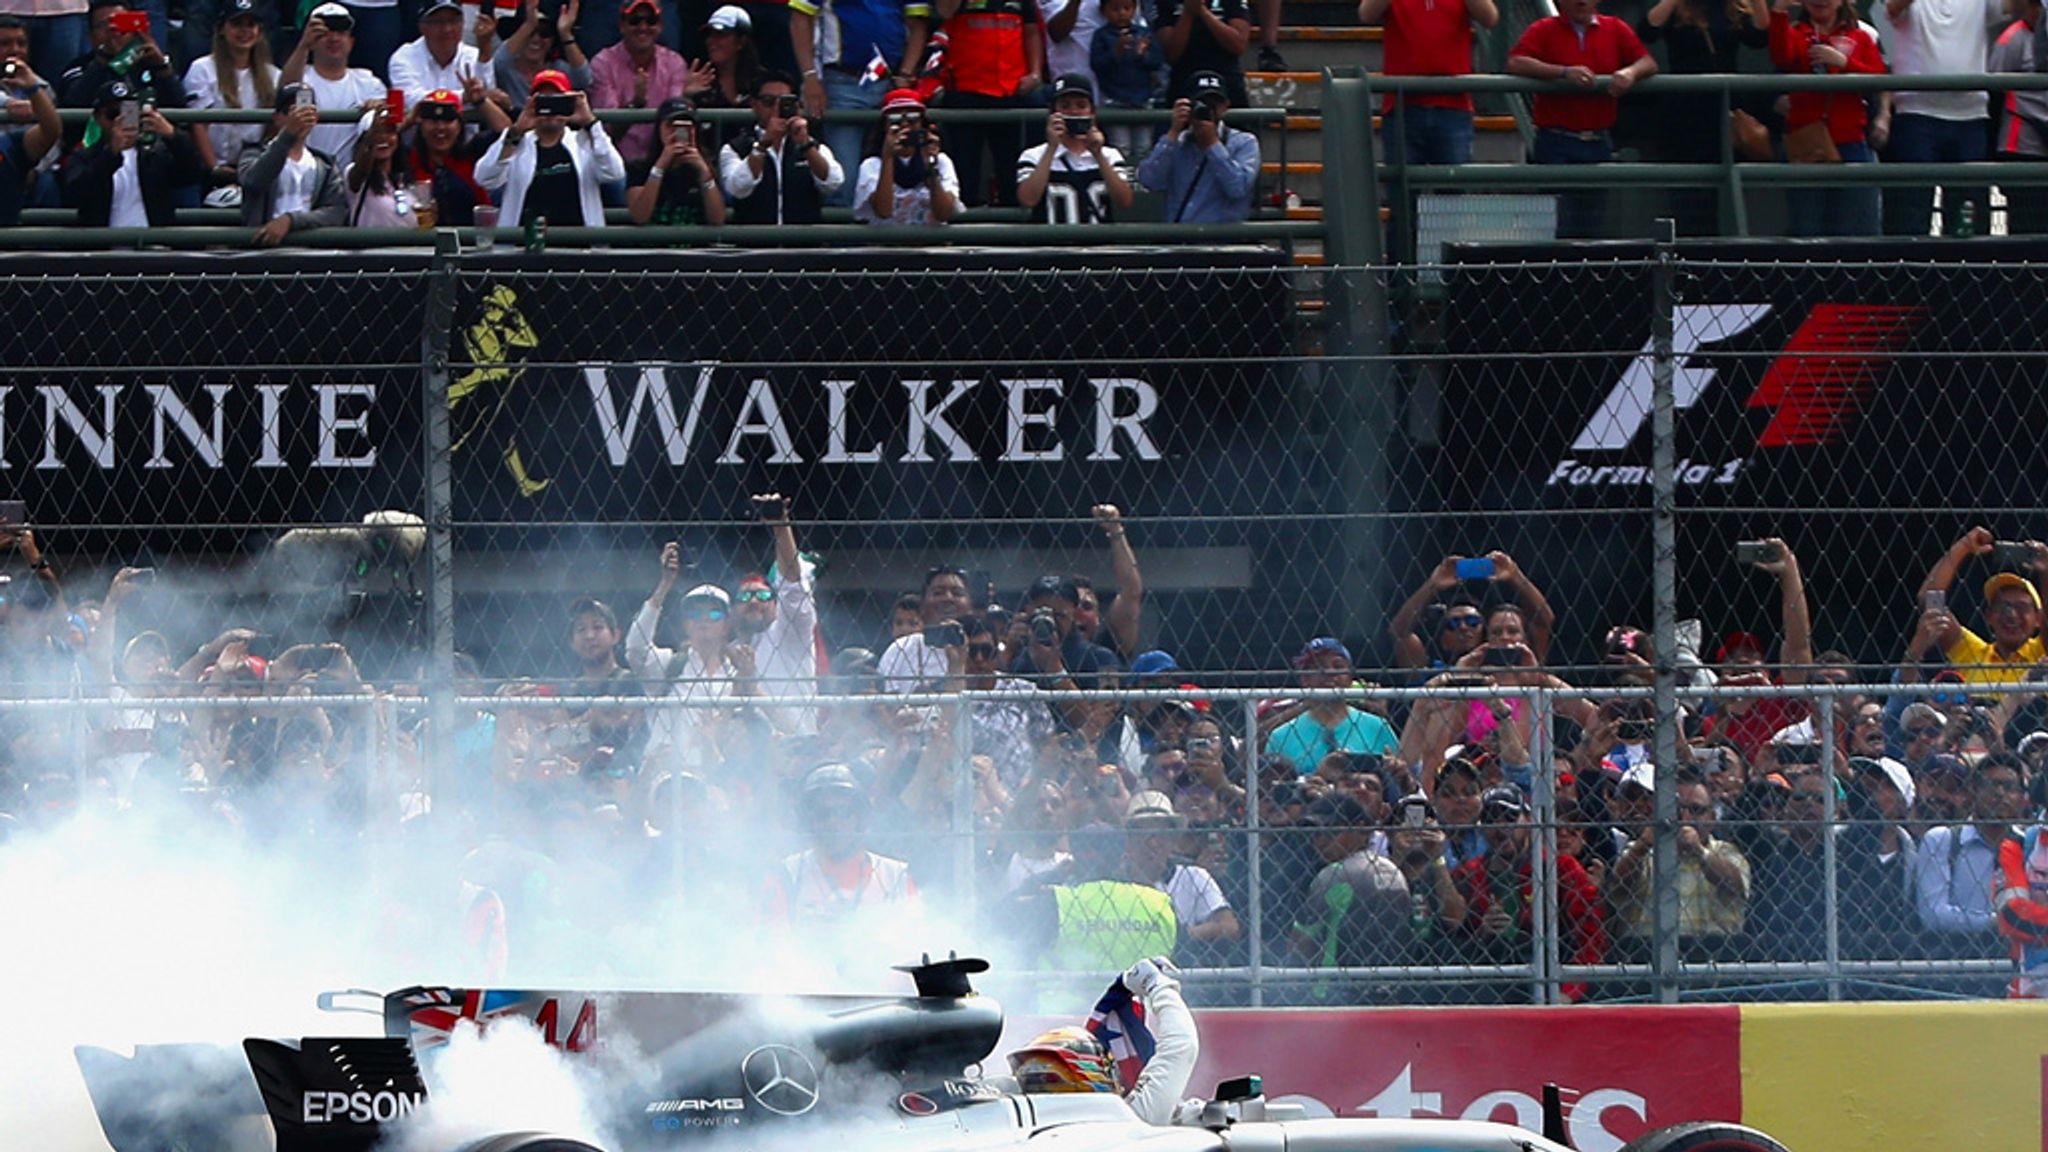 Lewis Hamilton 2017 F1 world championship won in a 'horrible way